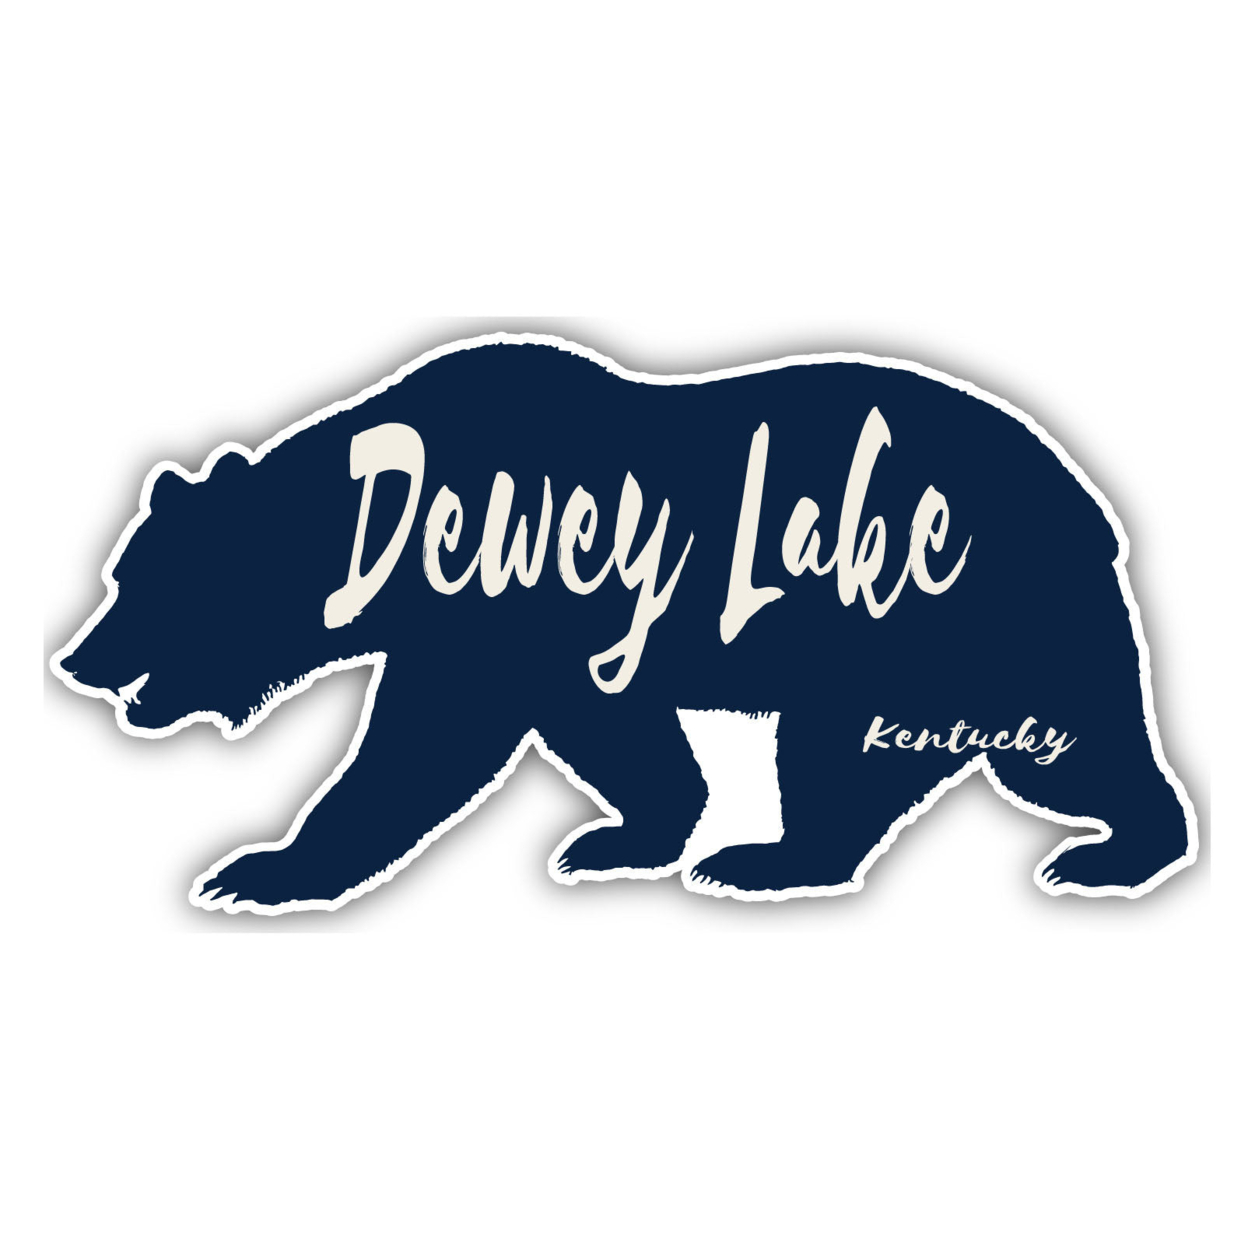 Dewey Lake Kentucky Souvenir Decorative Stickers (Choose Theme And Size) - 4-Pack, 4-Inch, Bear